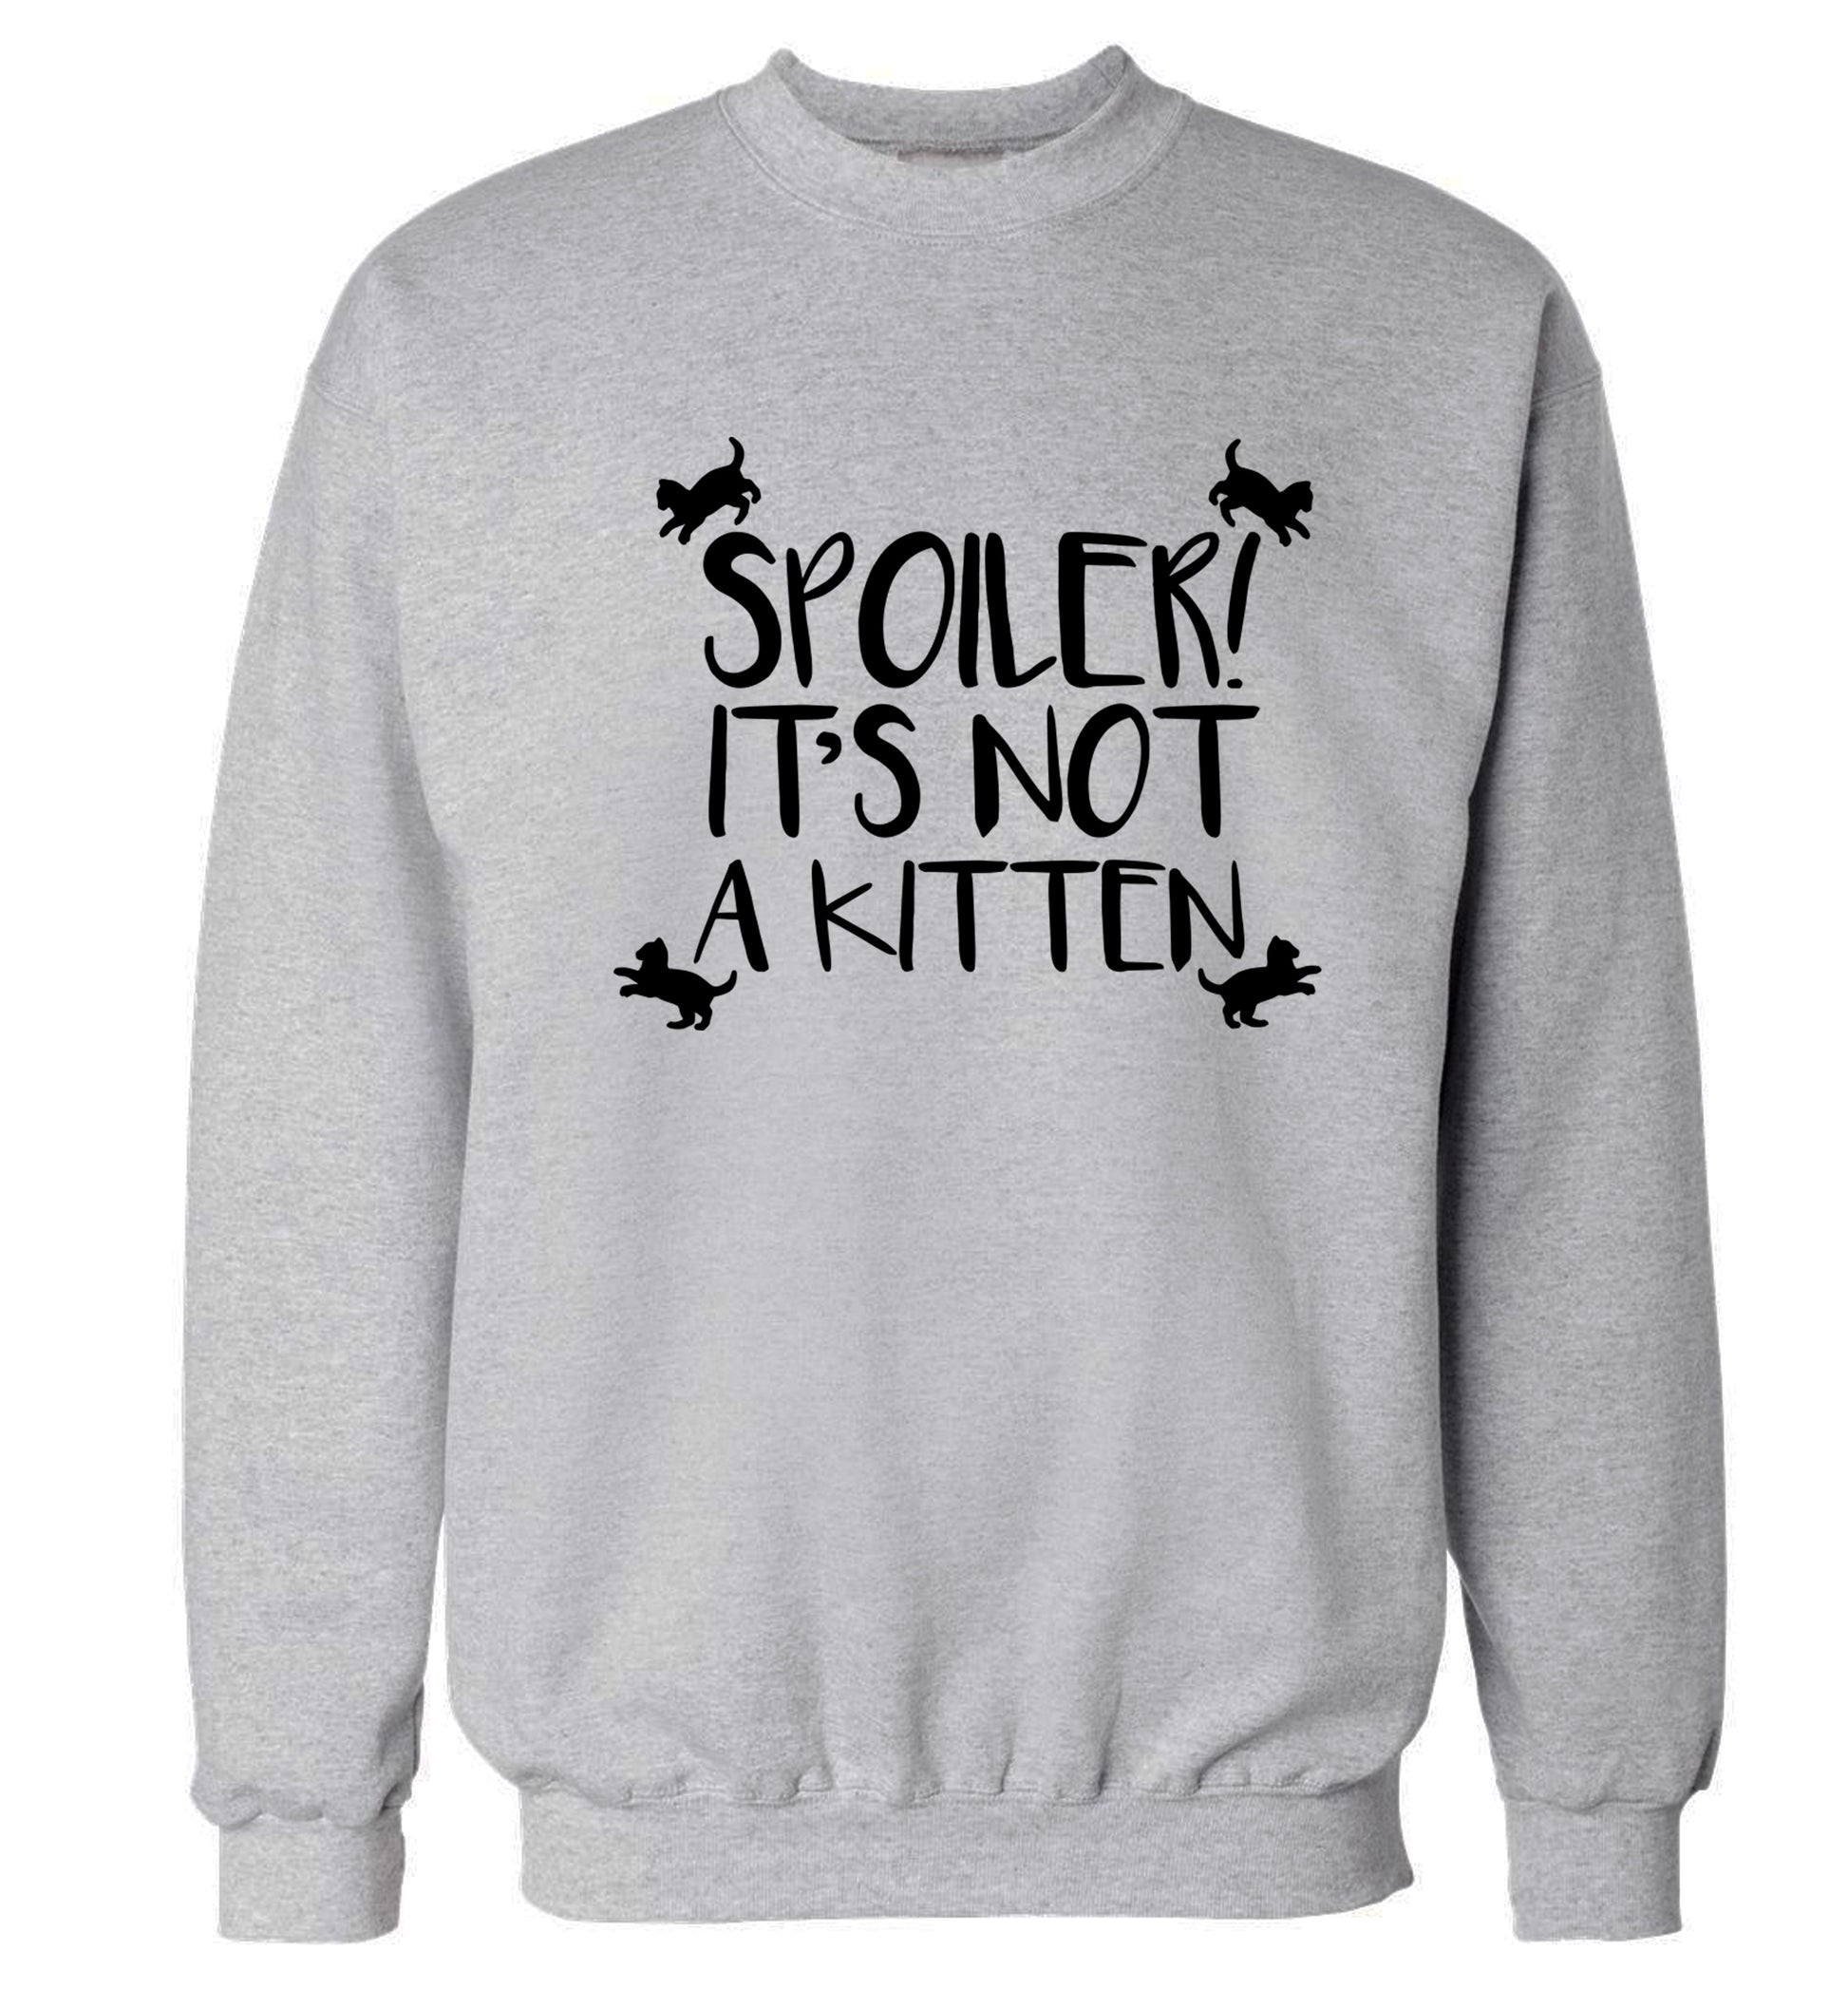 Spoiler it's not a kitten Adult's unisex grey Sweater 2XL